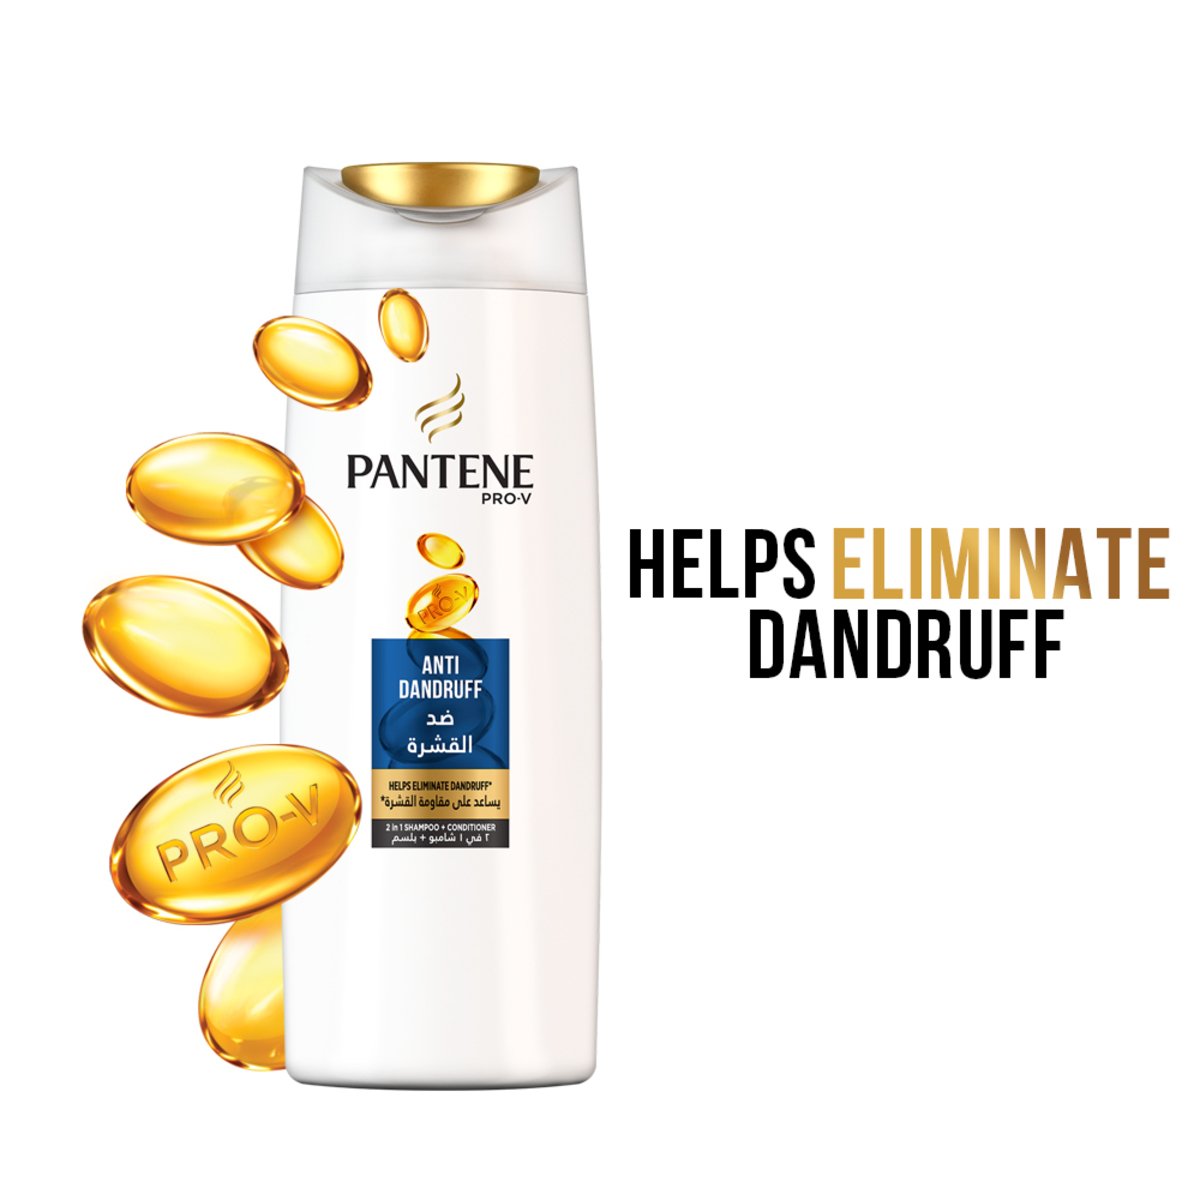 Pantene Pro-V Anti-Dandruff Shampoo, 600 ml